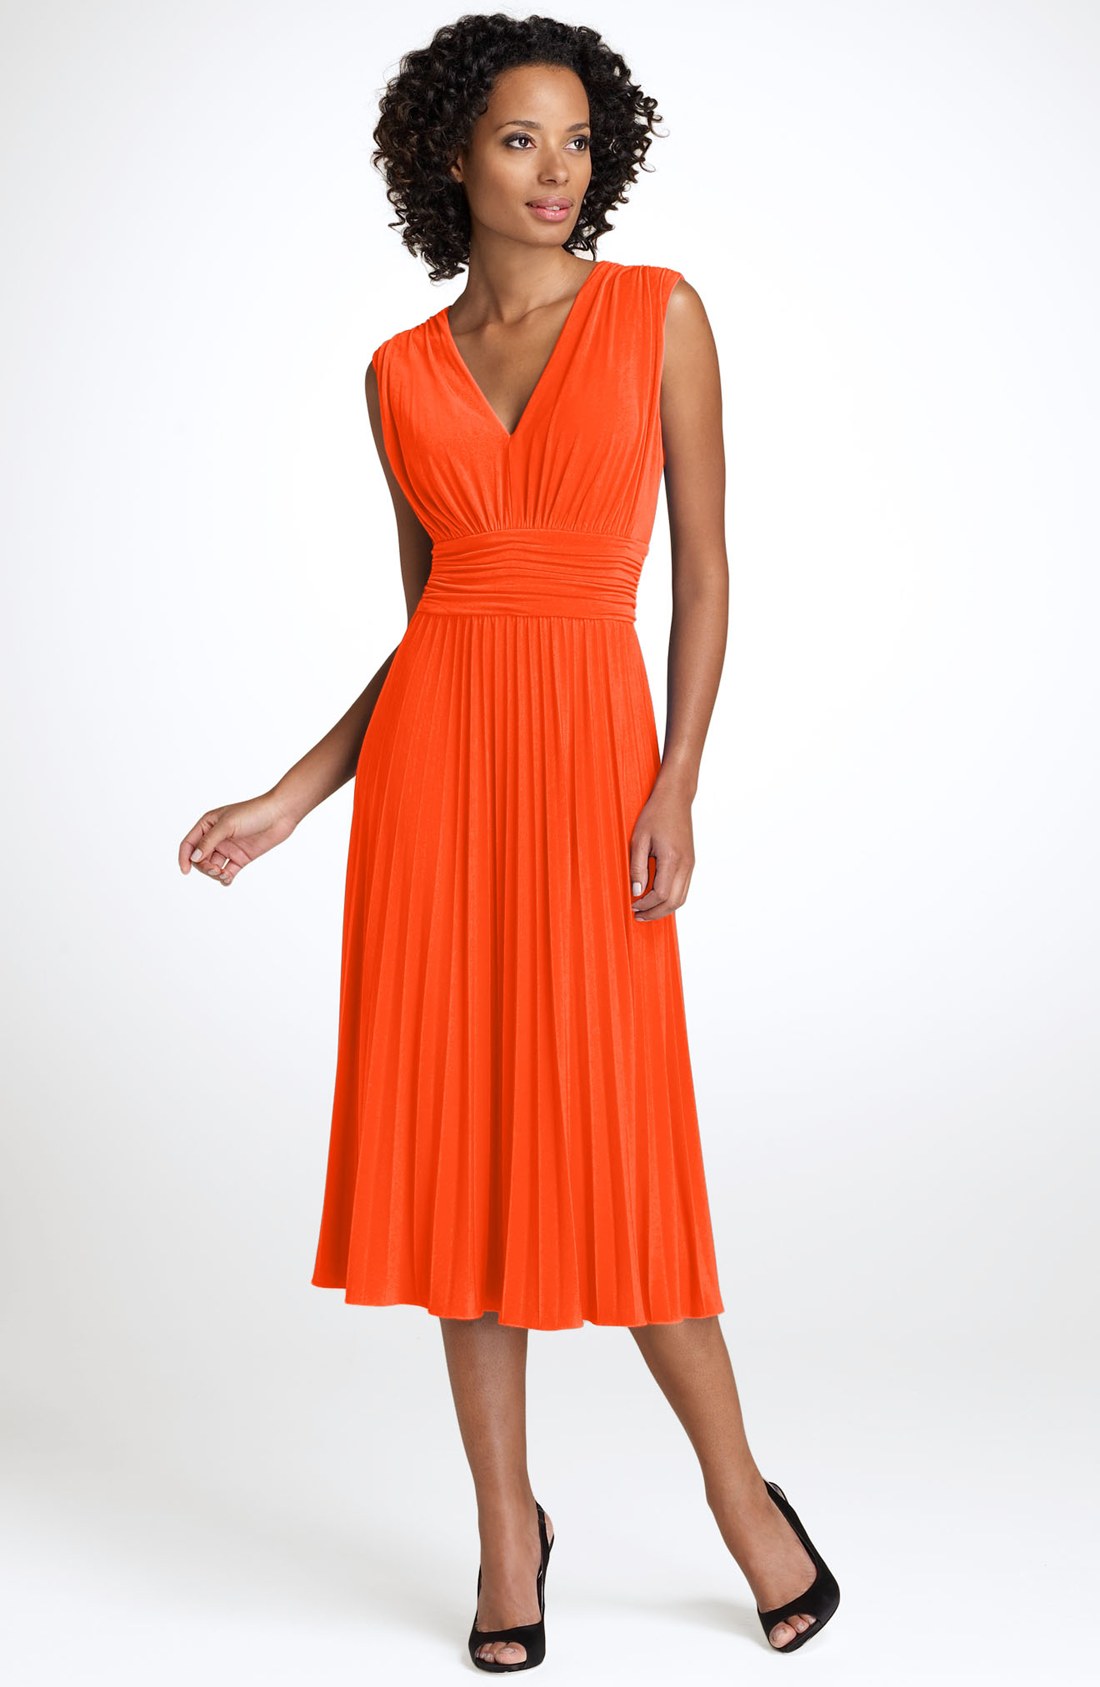 Orange Jersey Dress : Online Fashion Review